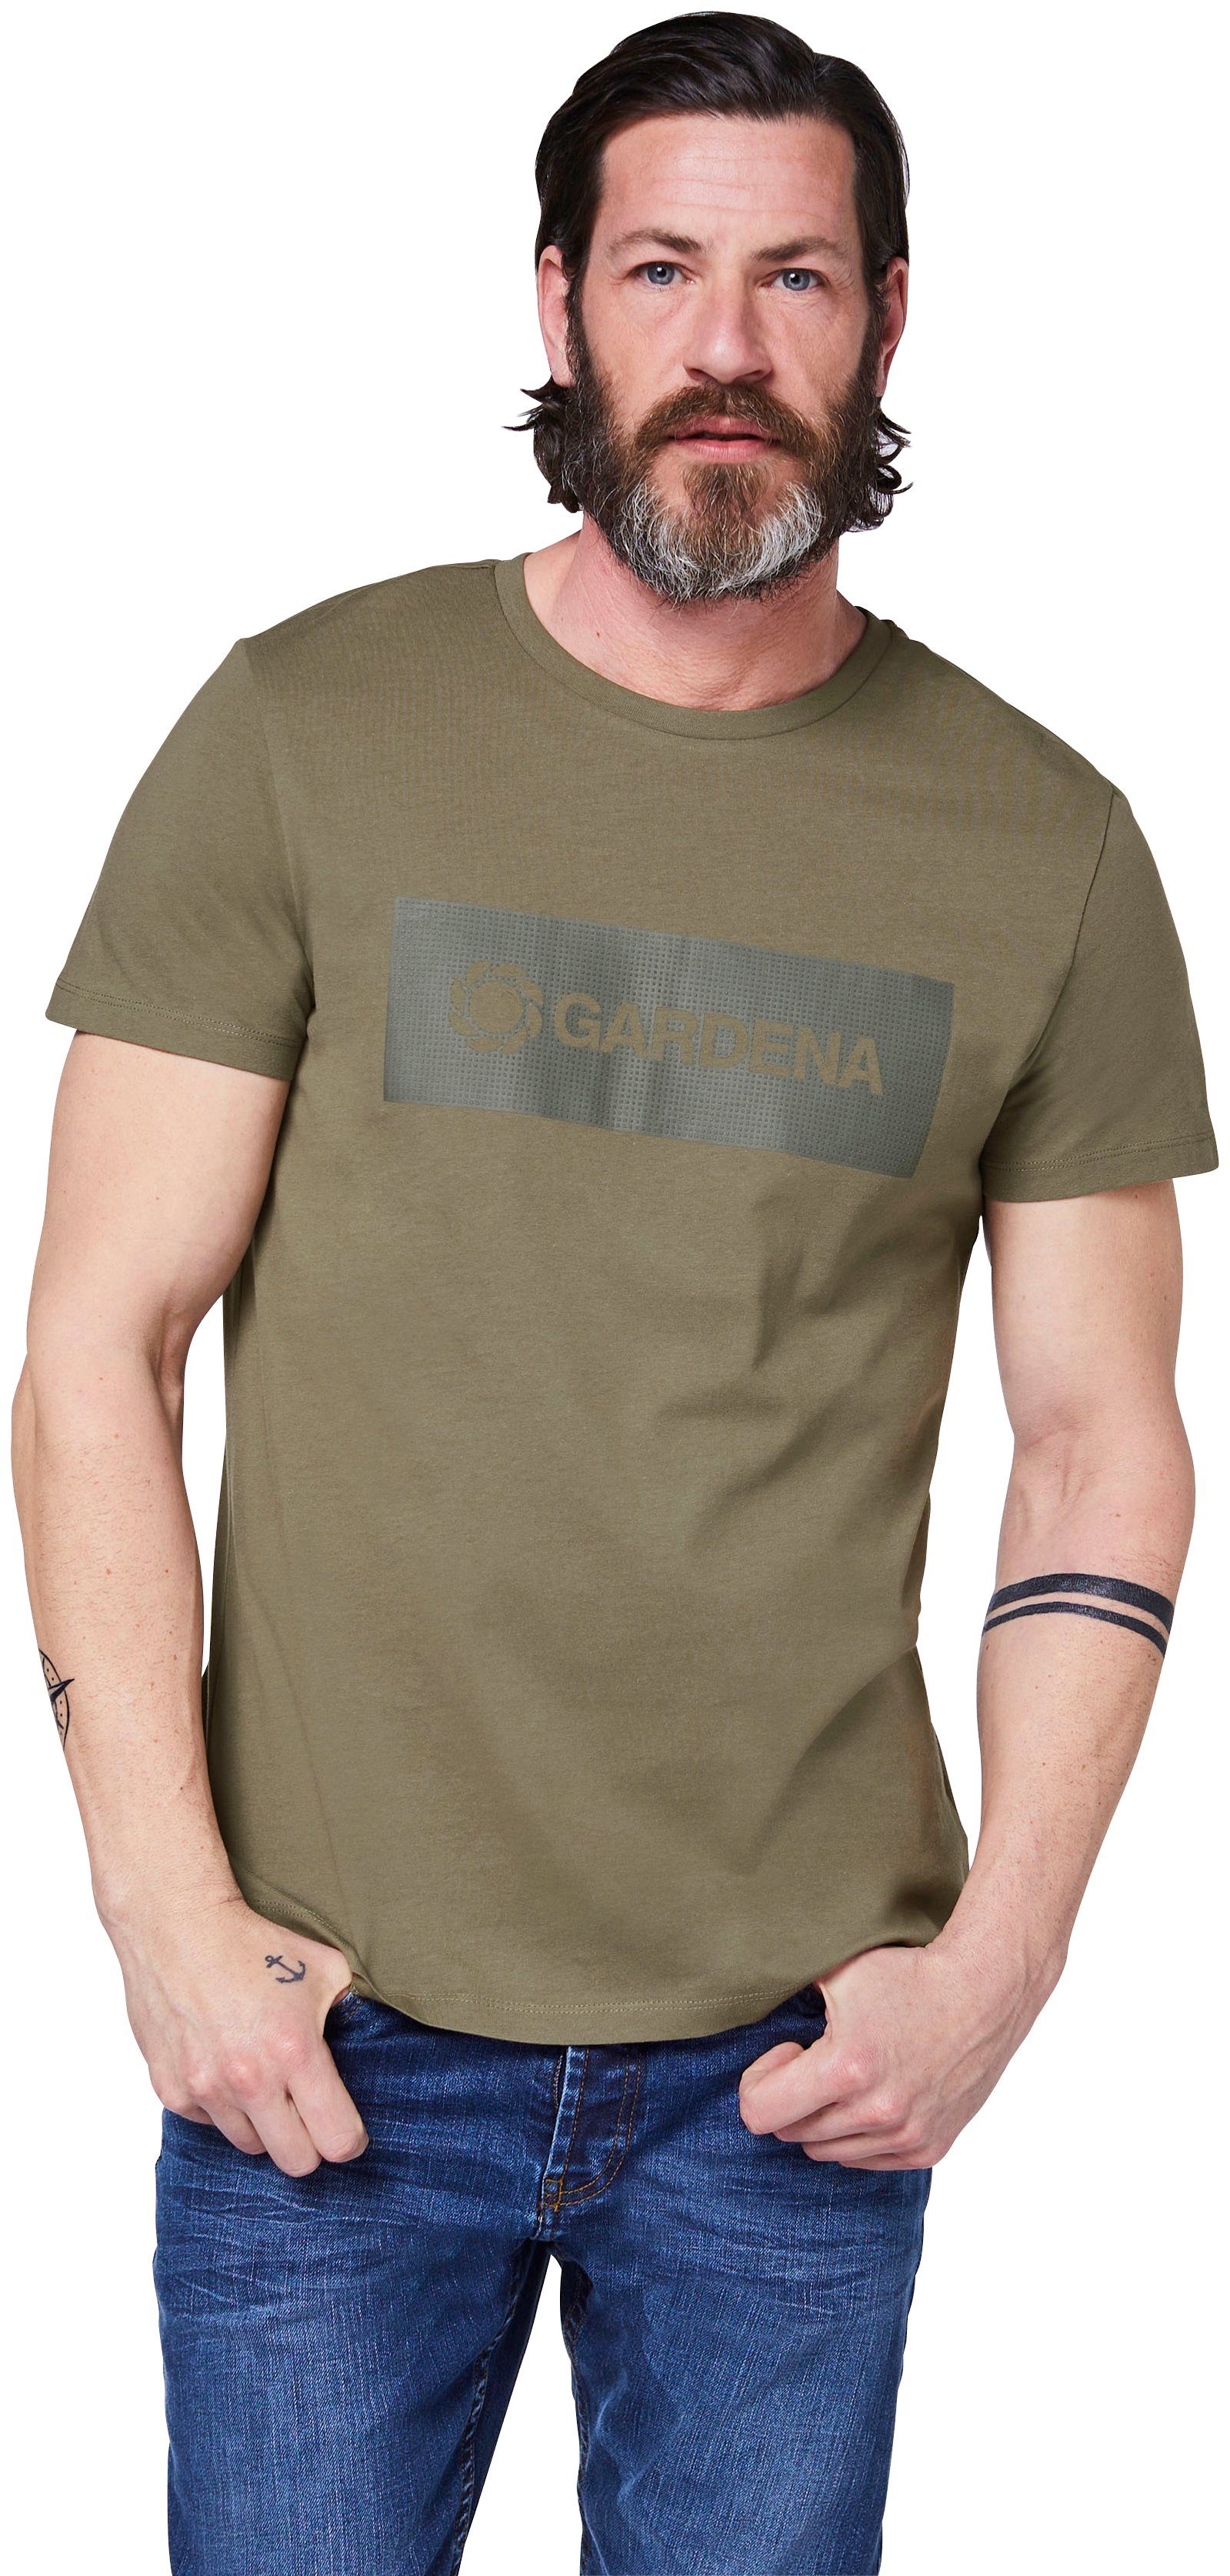 GARDENA T-Shirt Gardena-Logodruck Dusty Olive mit